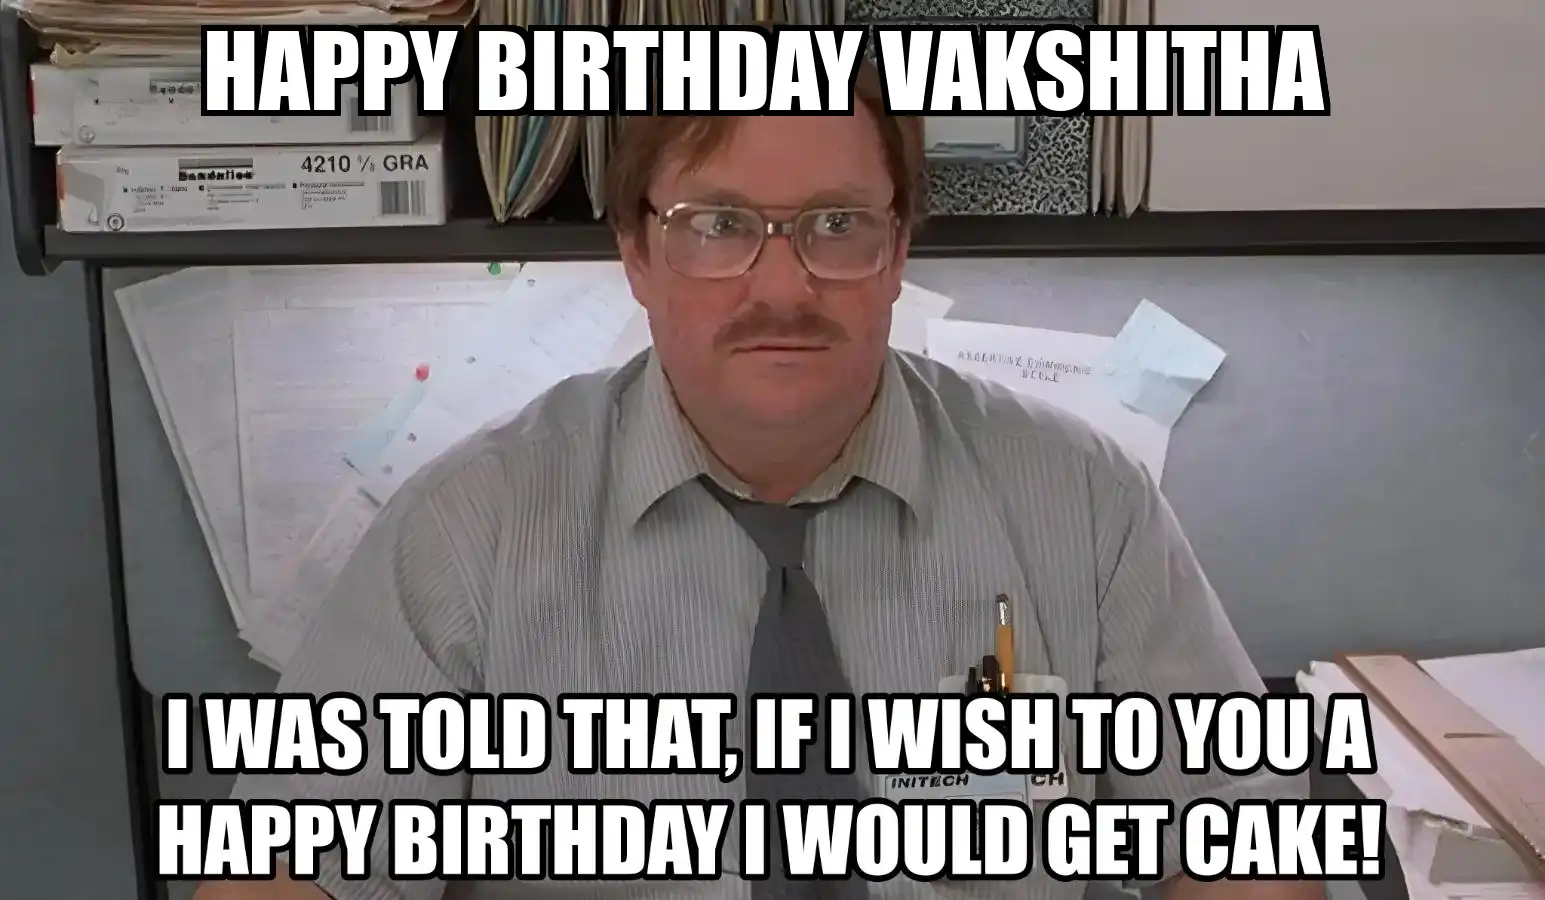 Happy Birthday Vakshitha I Would Get A Cake Meme